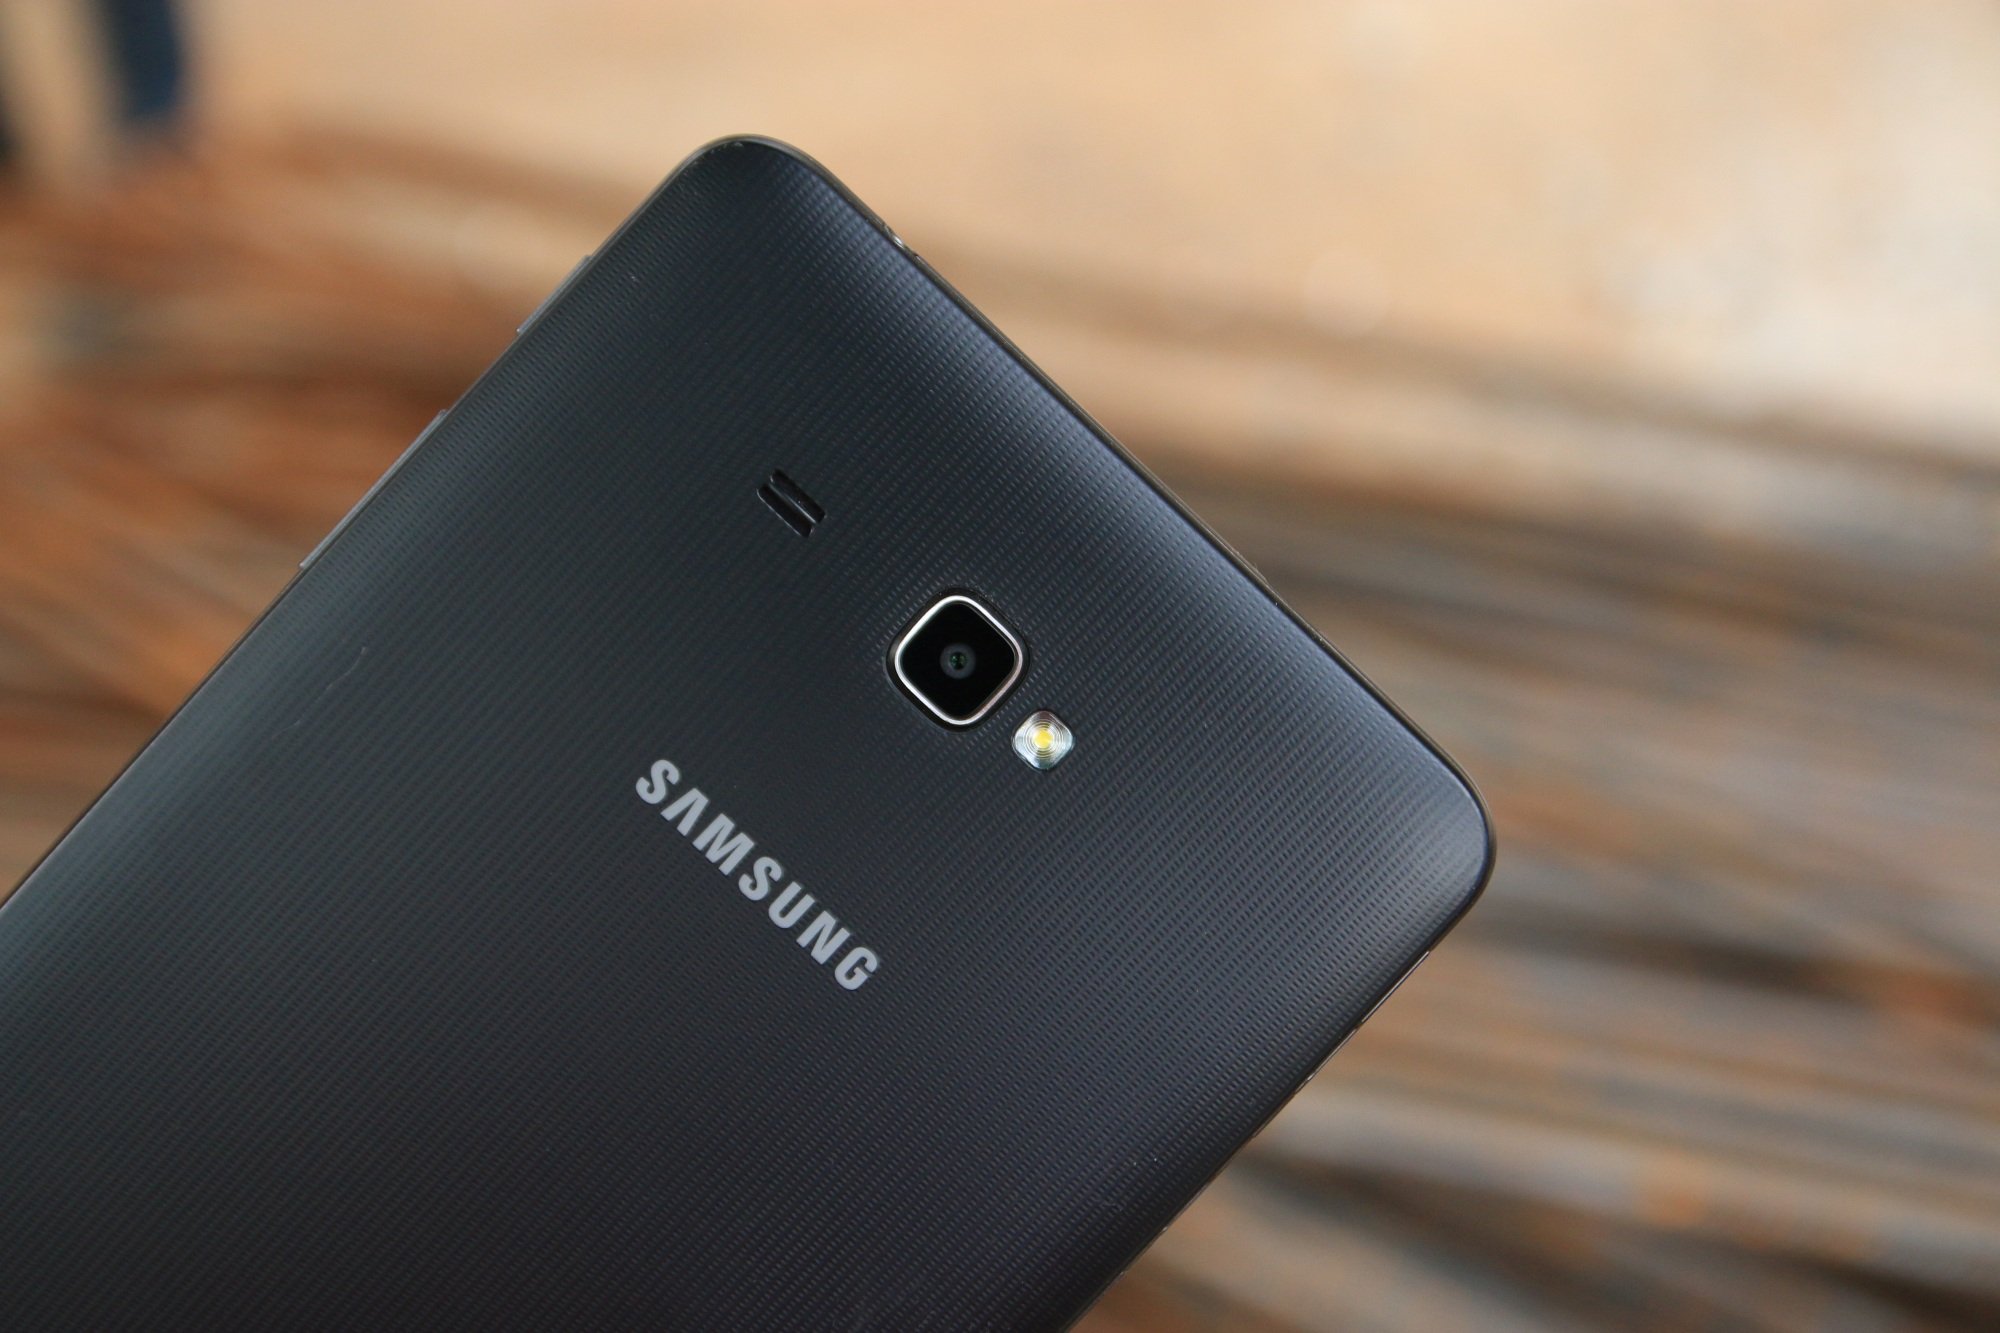 Samsung Galaxy S22: Exynos 2200 model fails miserably in battery